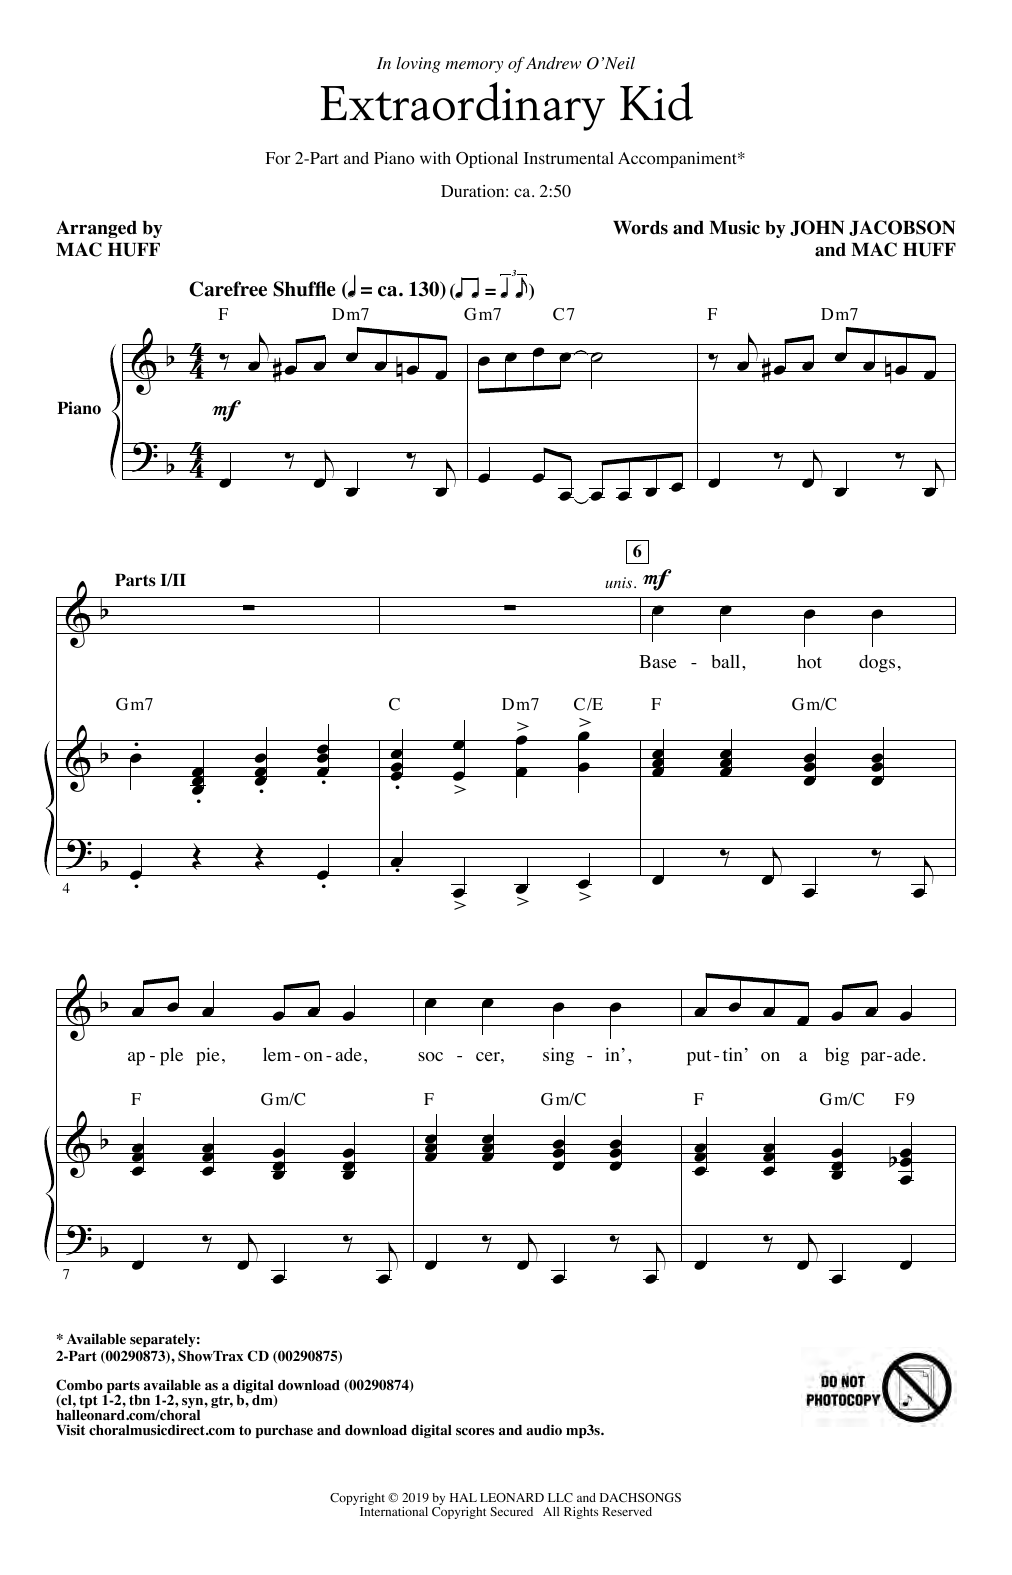 John Jacobson & Mac Huff Extraordinary Kid Sheet Music Notes & Chords for 2-Part Choir - Download or Print PDF